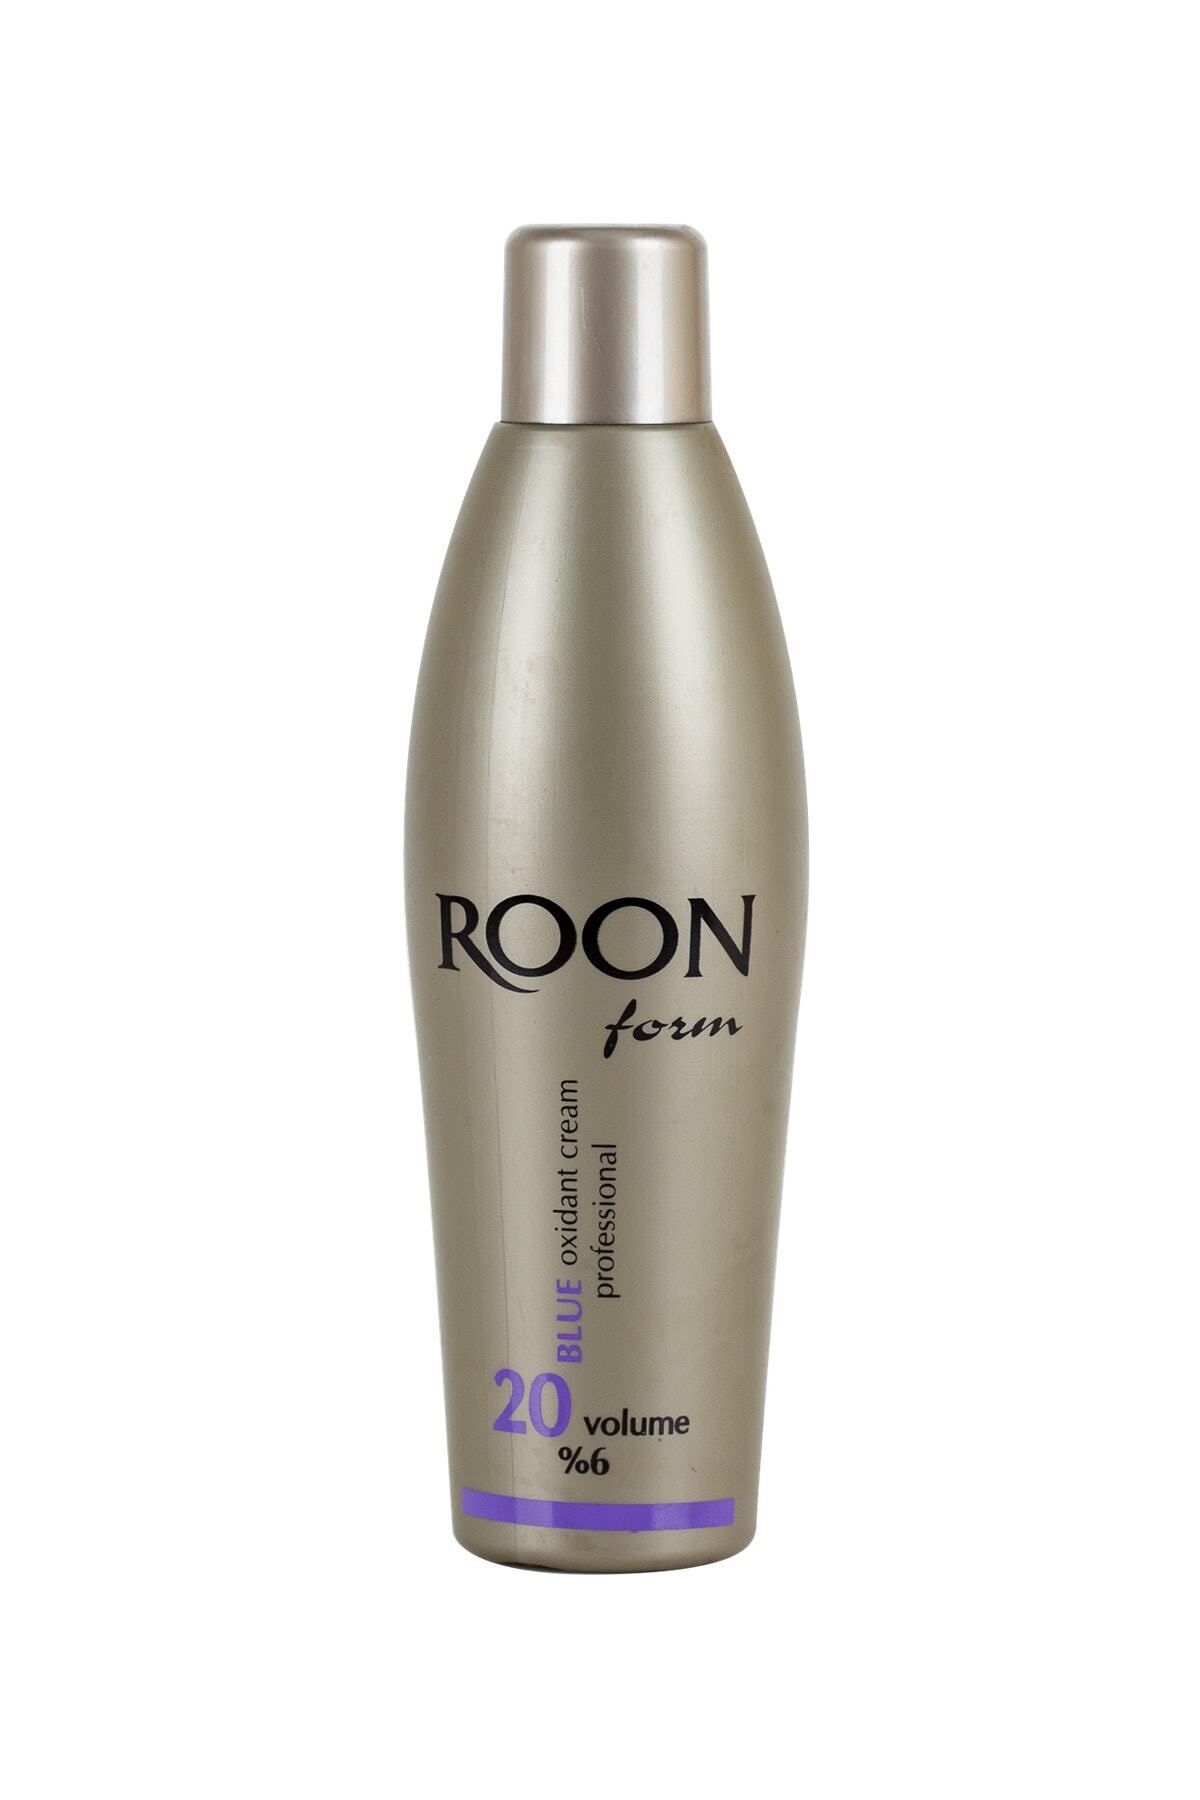 Roon Form 20 Volüm Mavi Oksidan Krem 750 ml